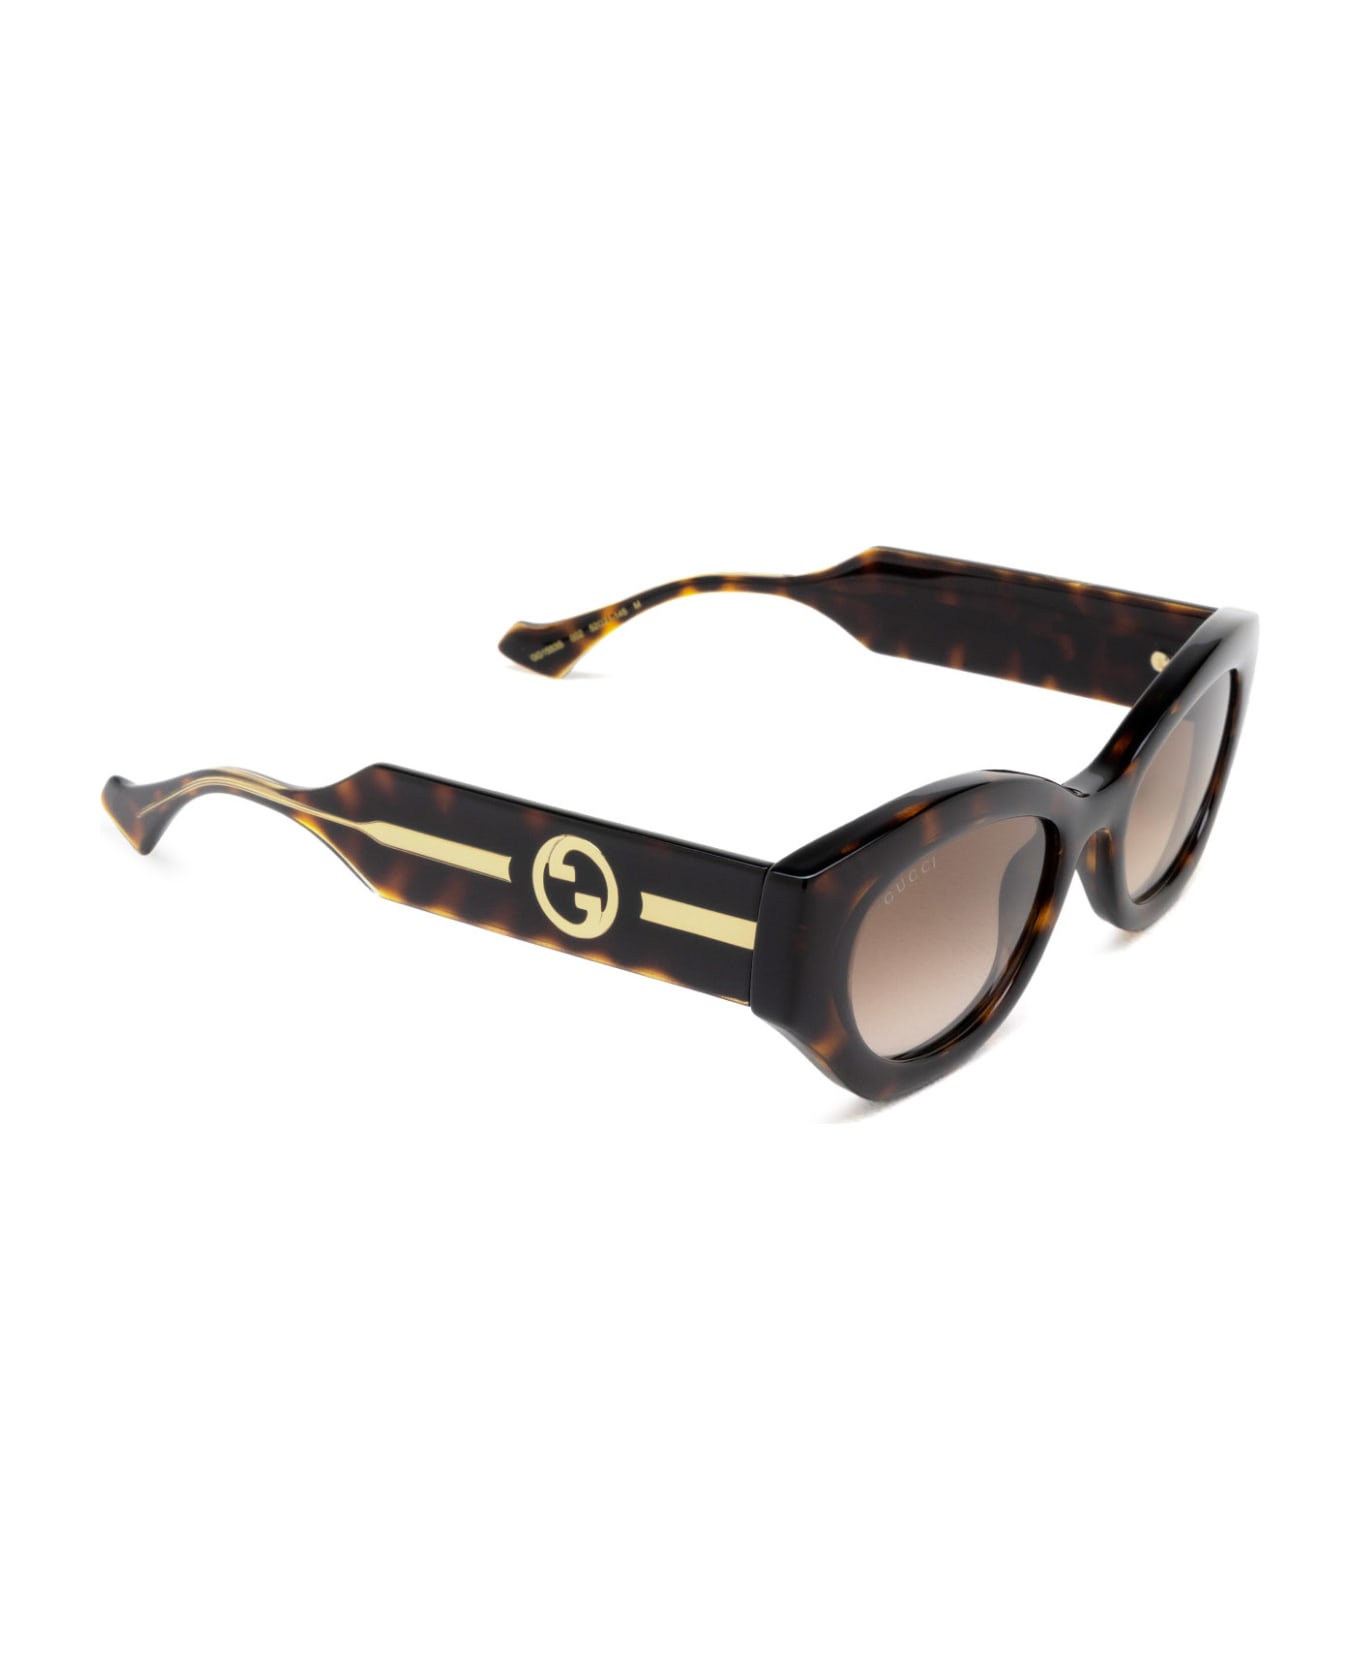 Gucci Eyewear Gg1553s Havana Sunglasses - Havana